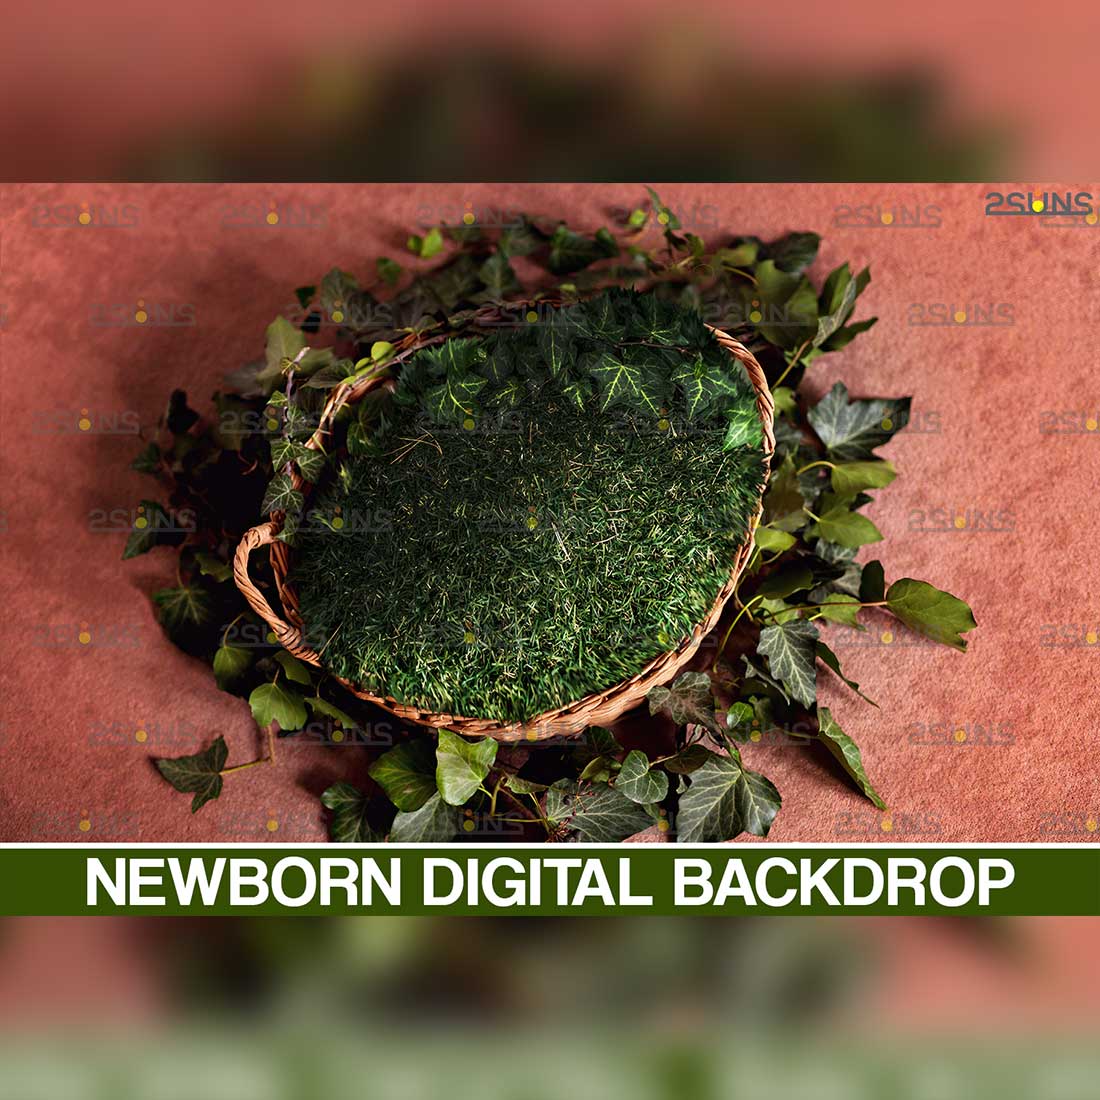 Newborn Digital Photo Backdrop Preview Image.